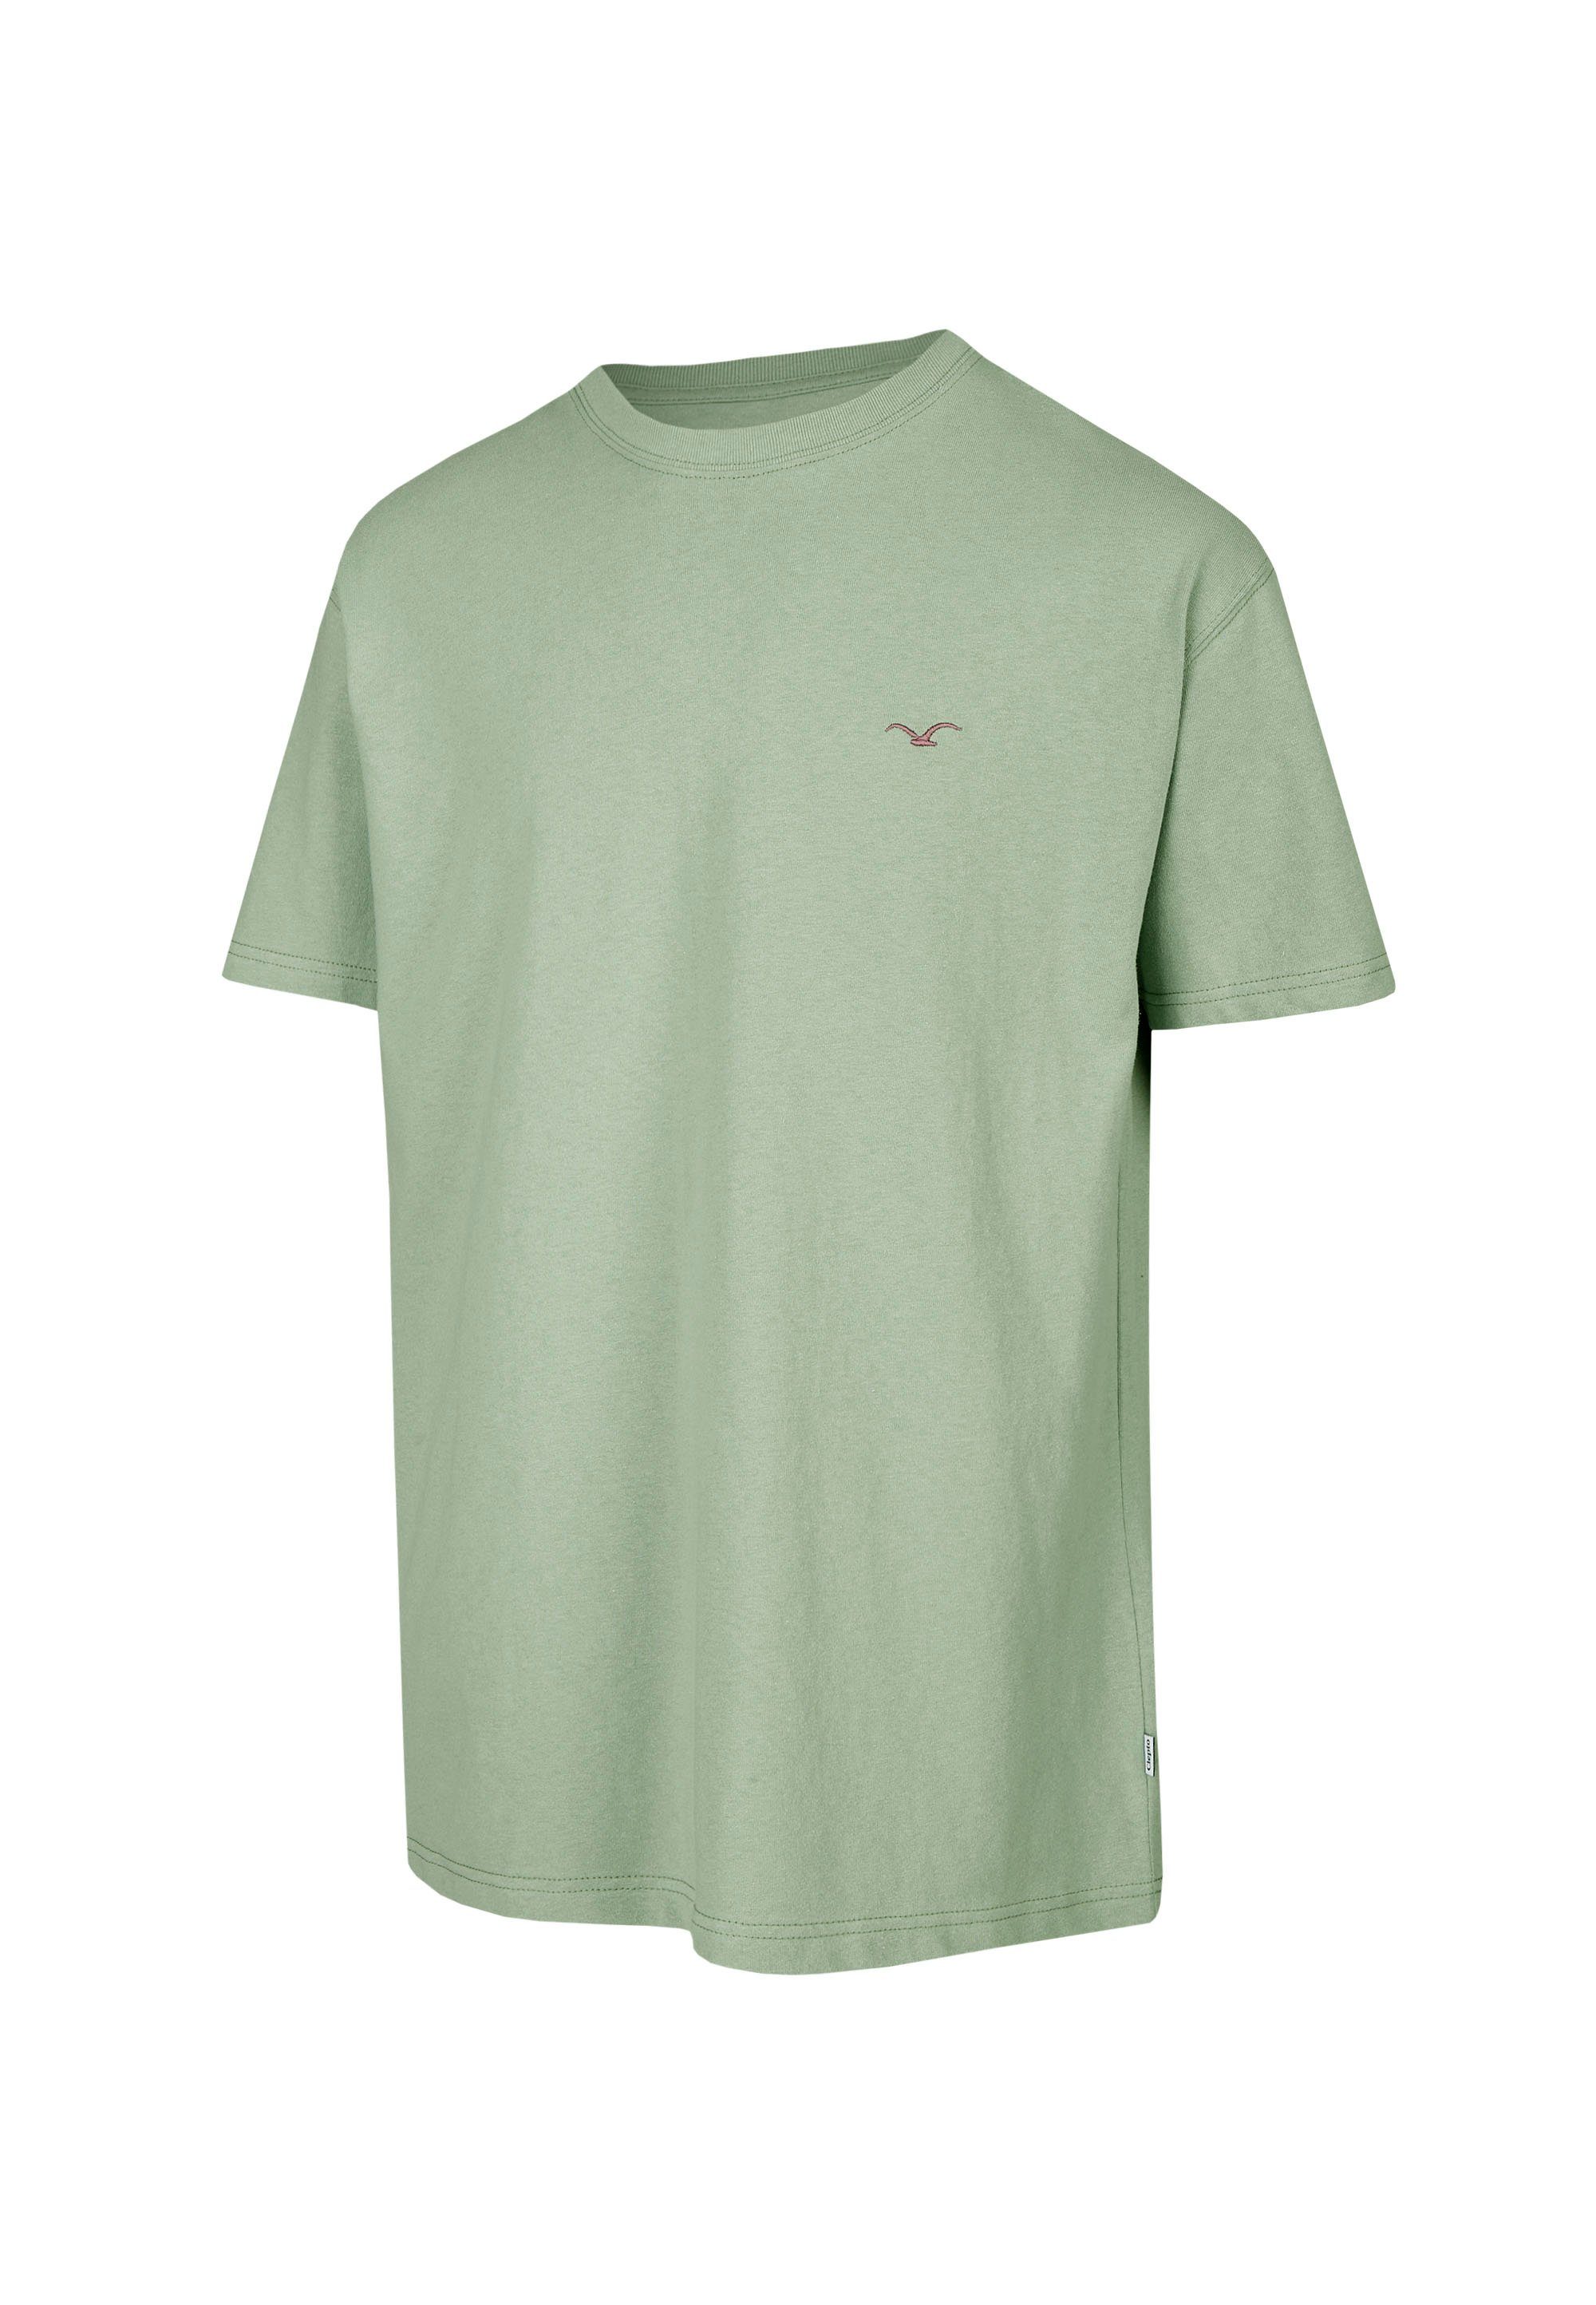 schlichtem Boxy Design T-Shirt in Cleptomanicx 2 Ligull hellgrün